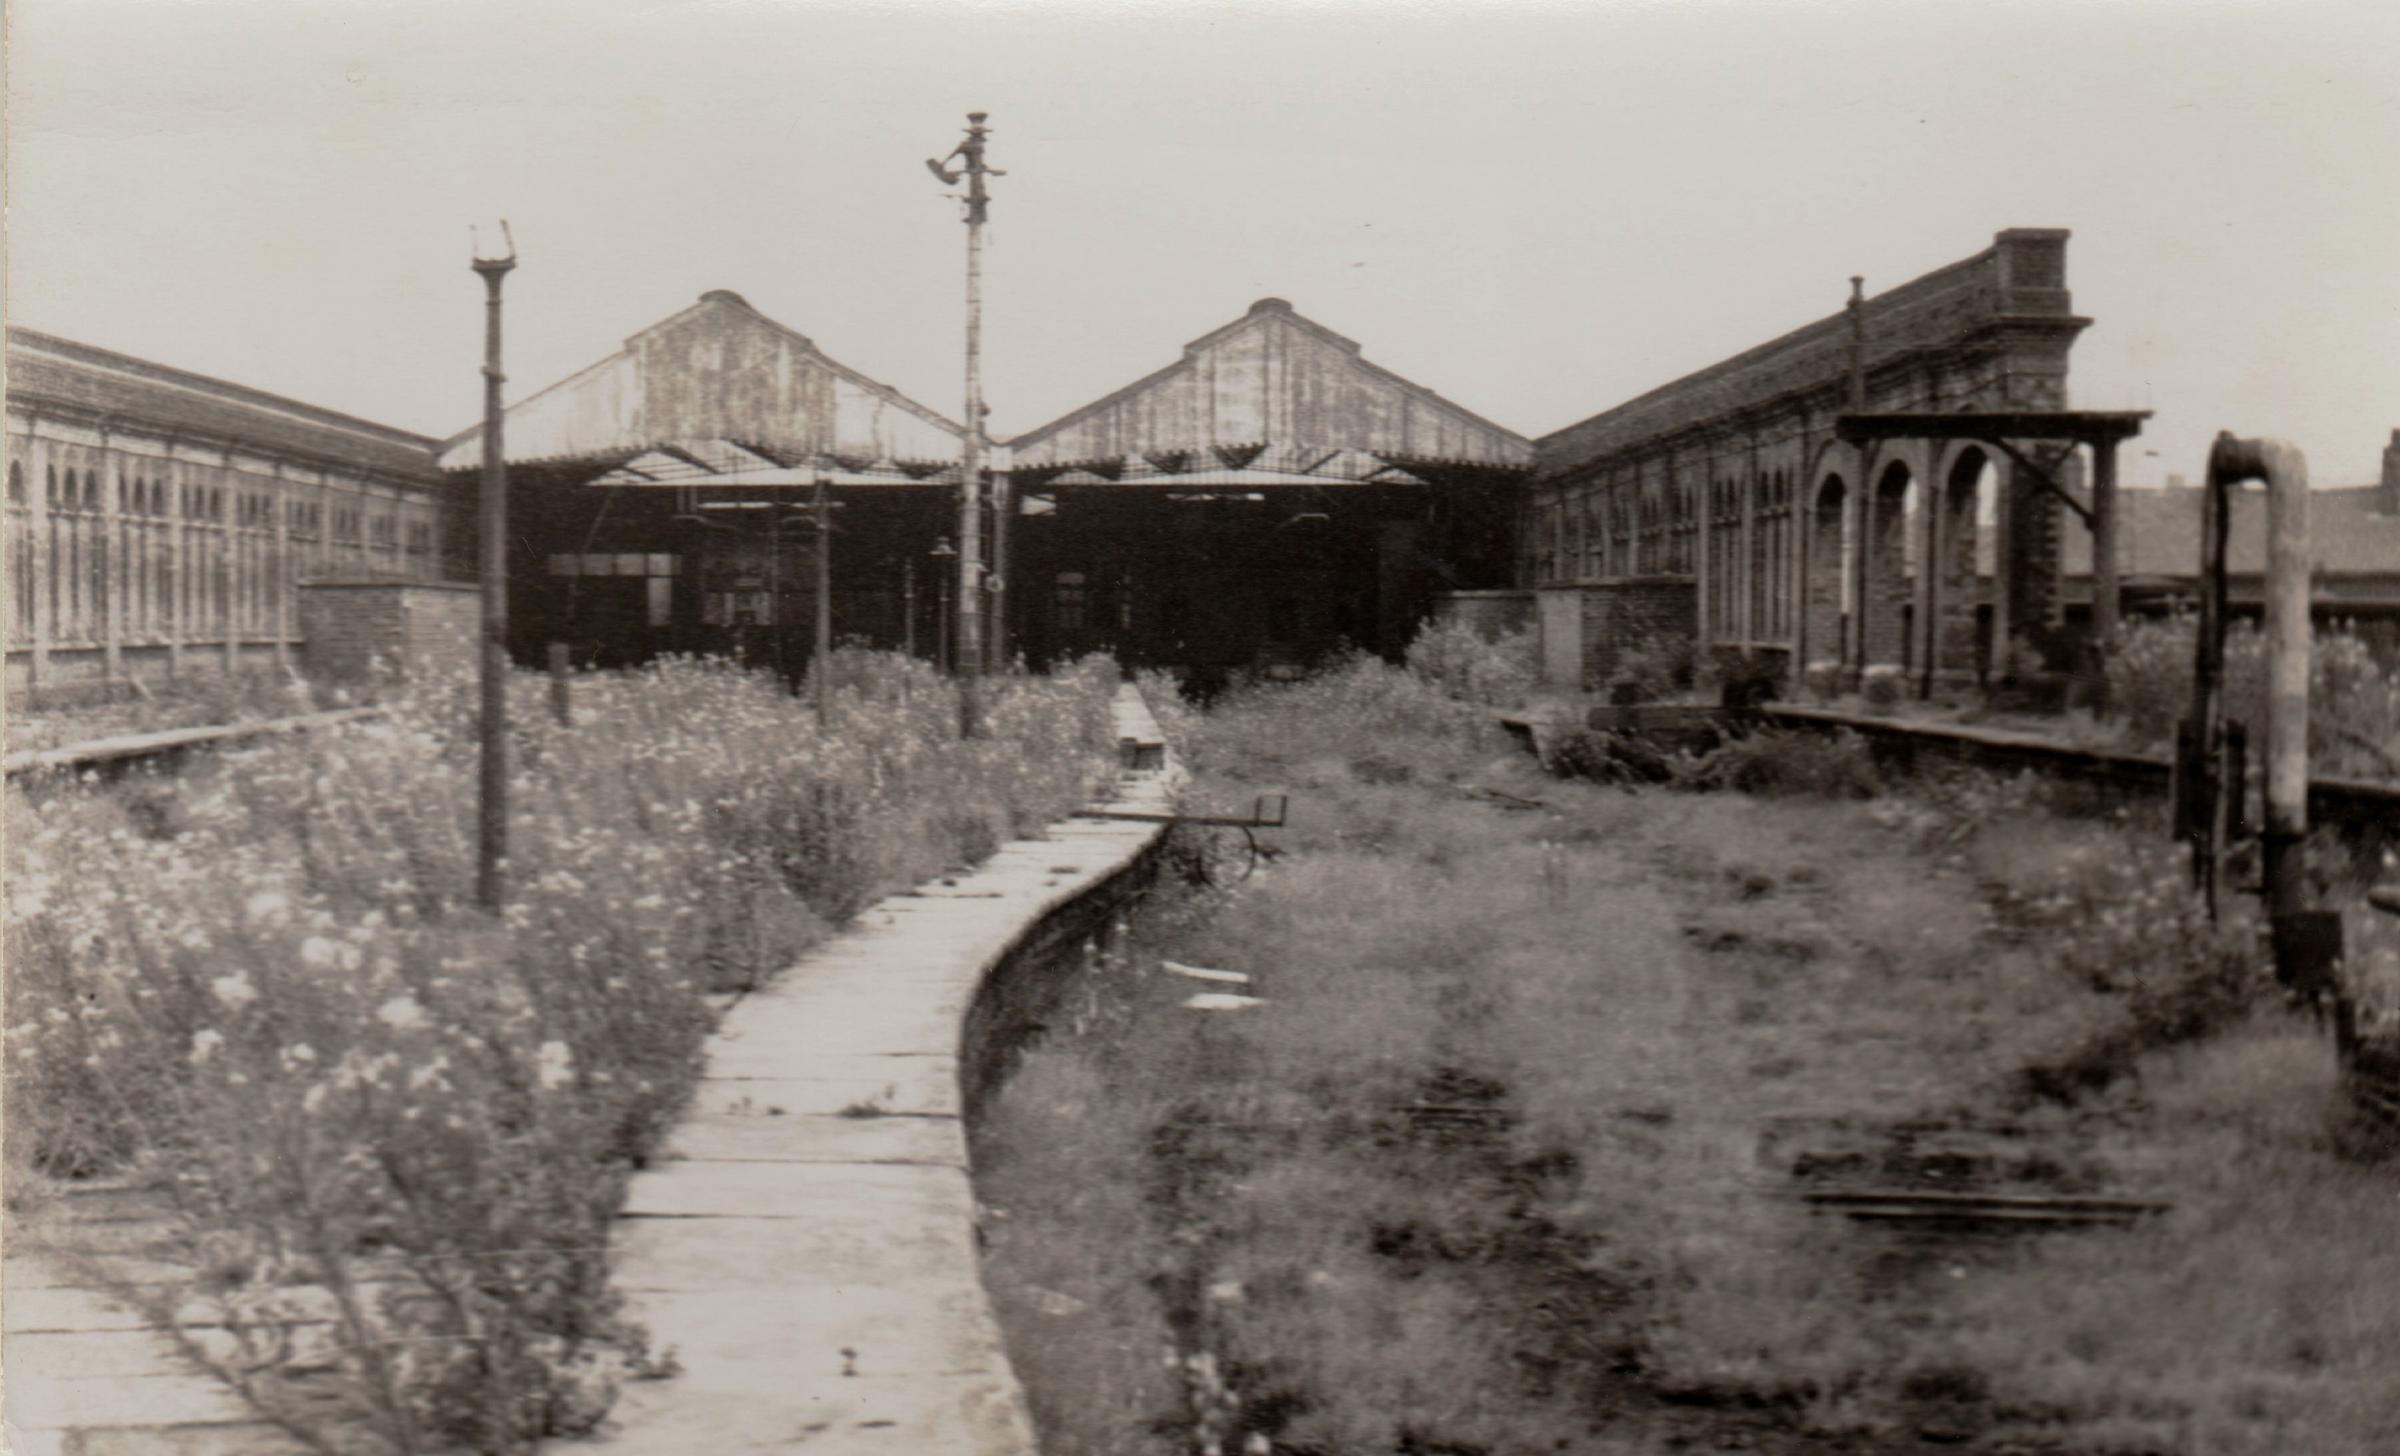 Great Moor Street Station, 1966, just before demolition